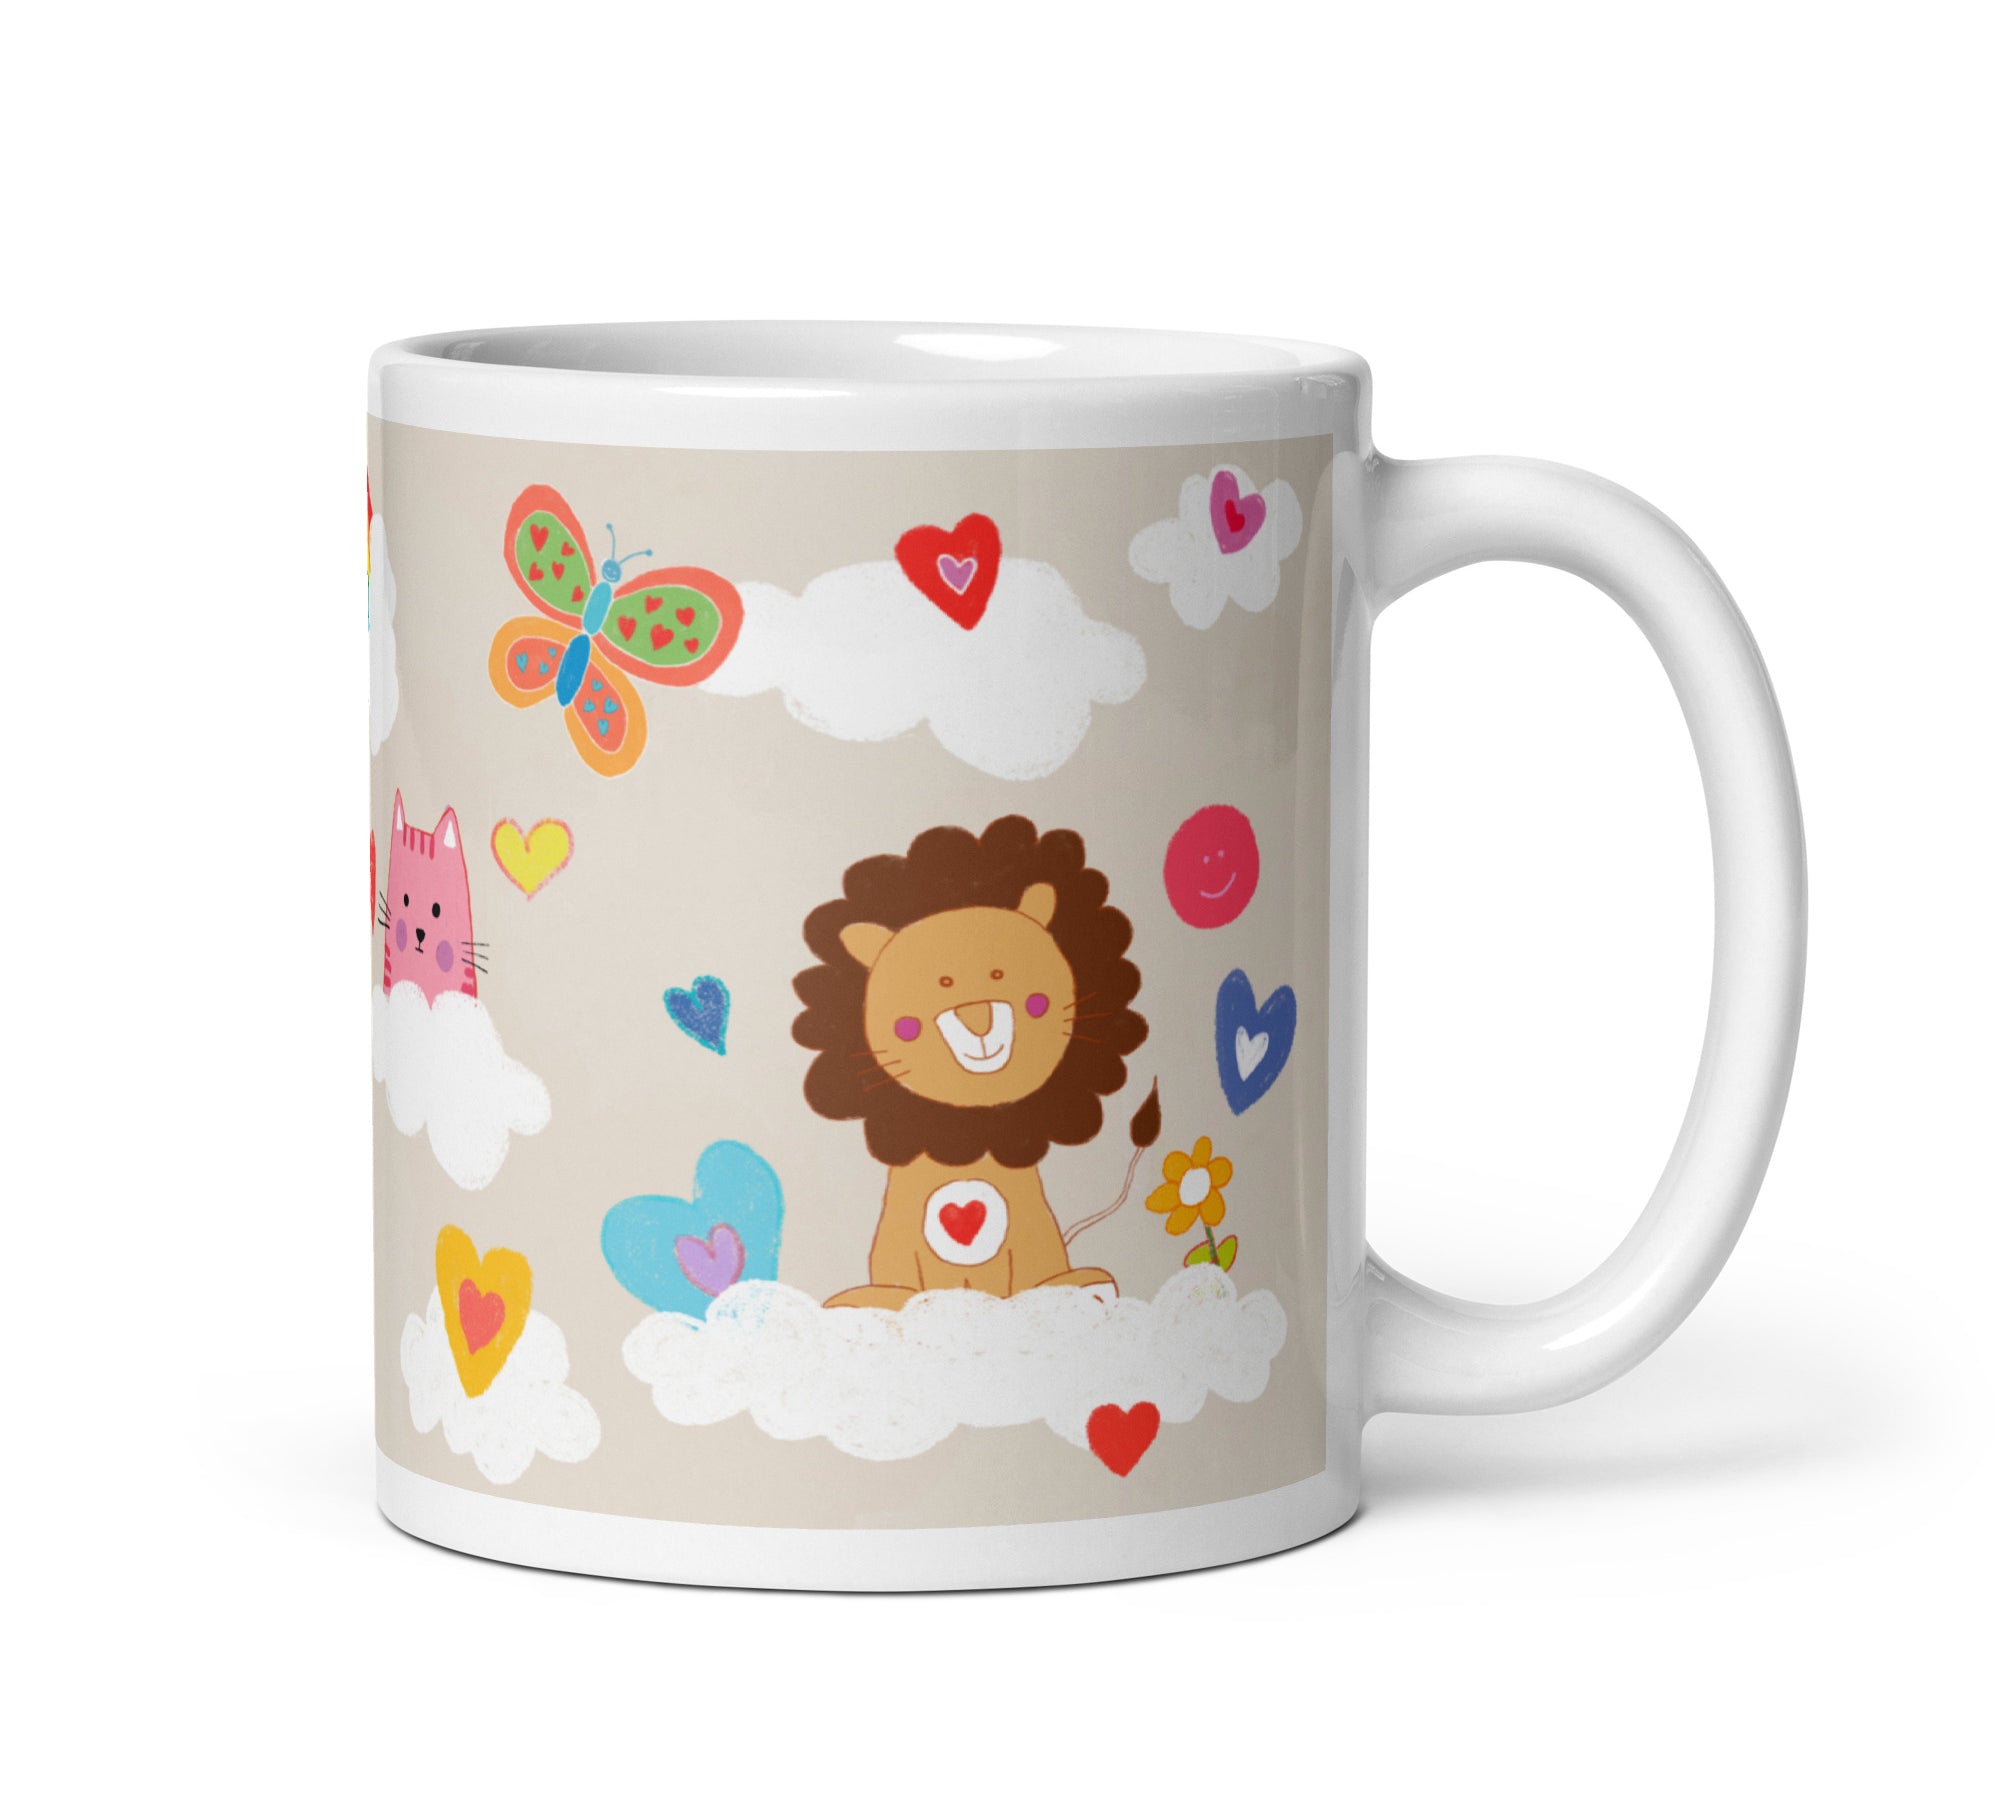 Happy Cute mug for kid - Fun Design for Children